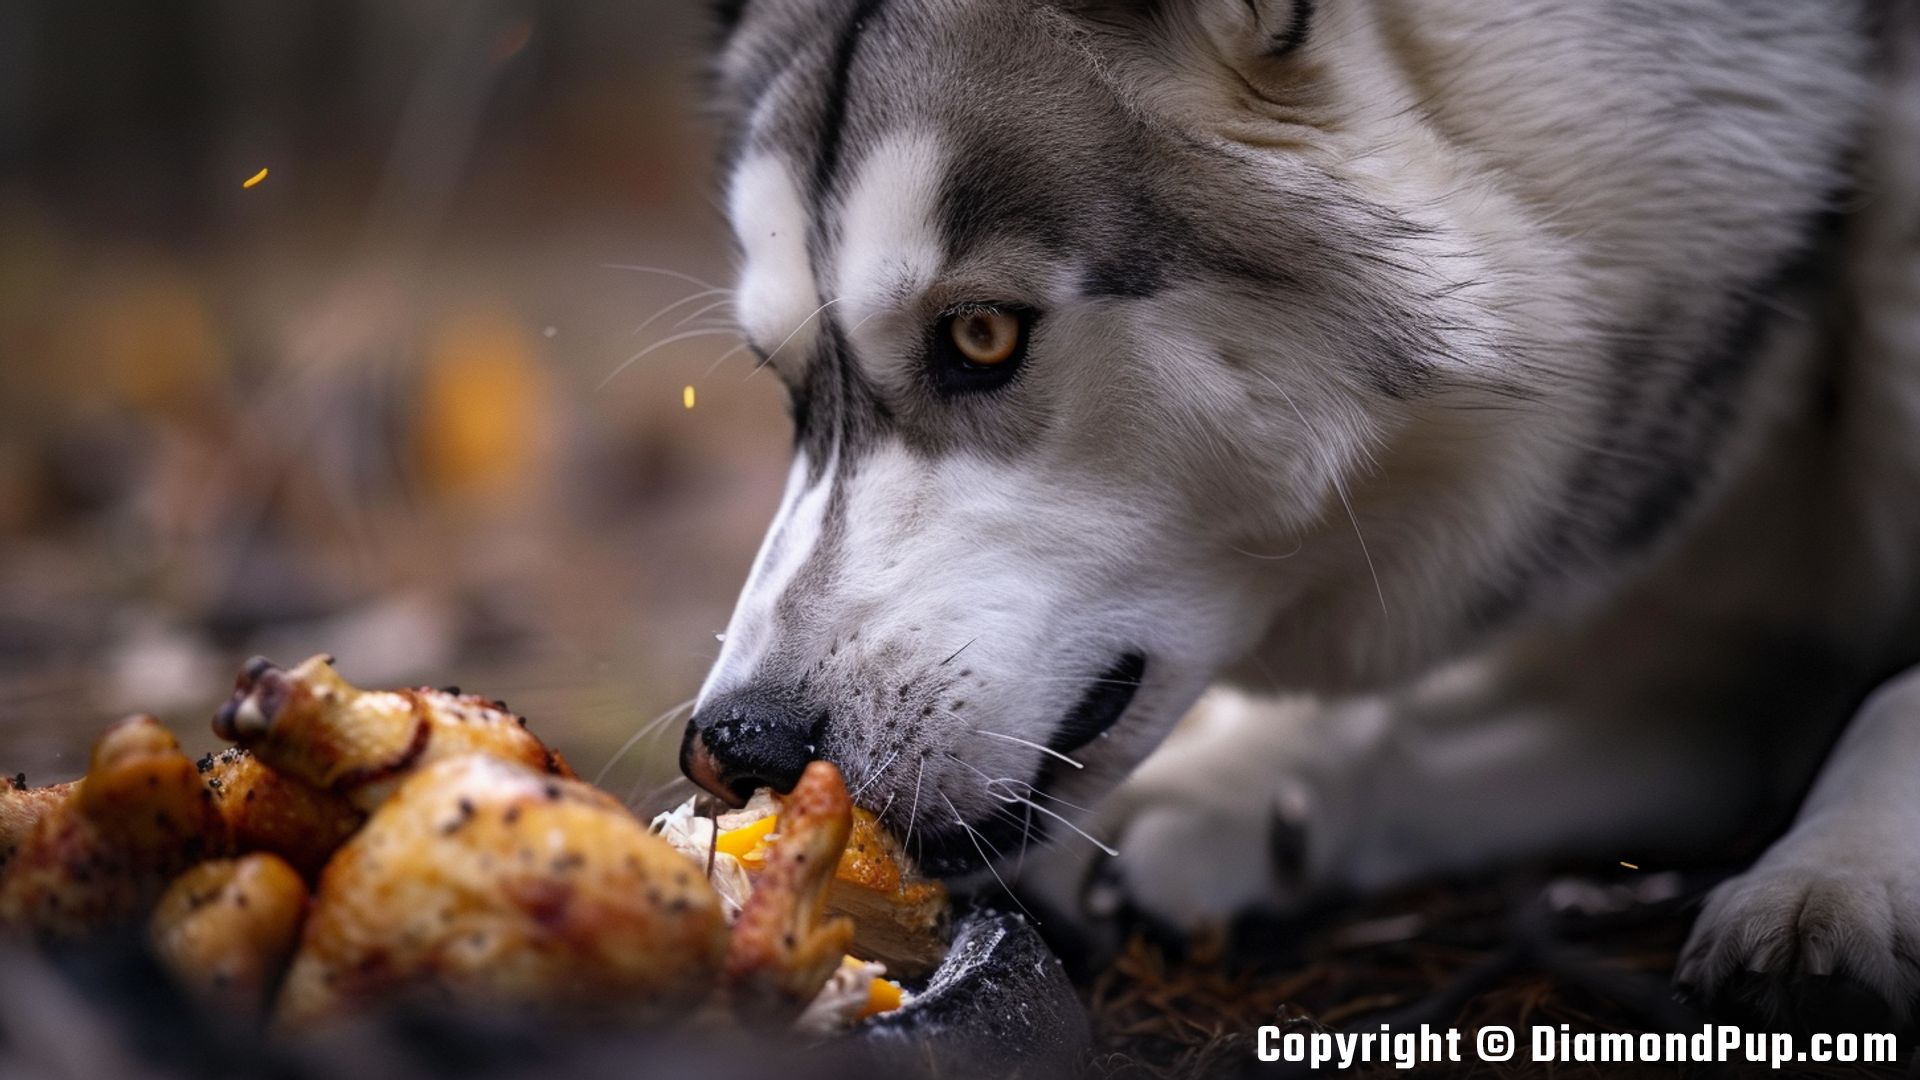 Photograph of an Adorable Husky Eating Chicken